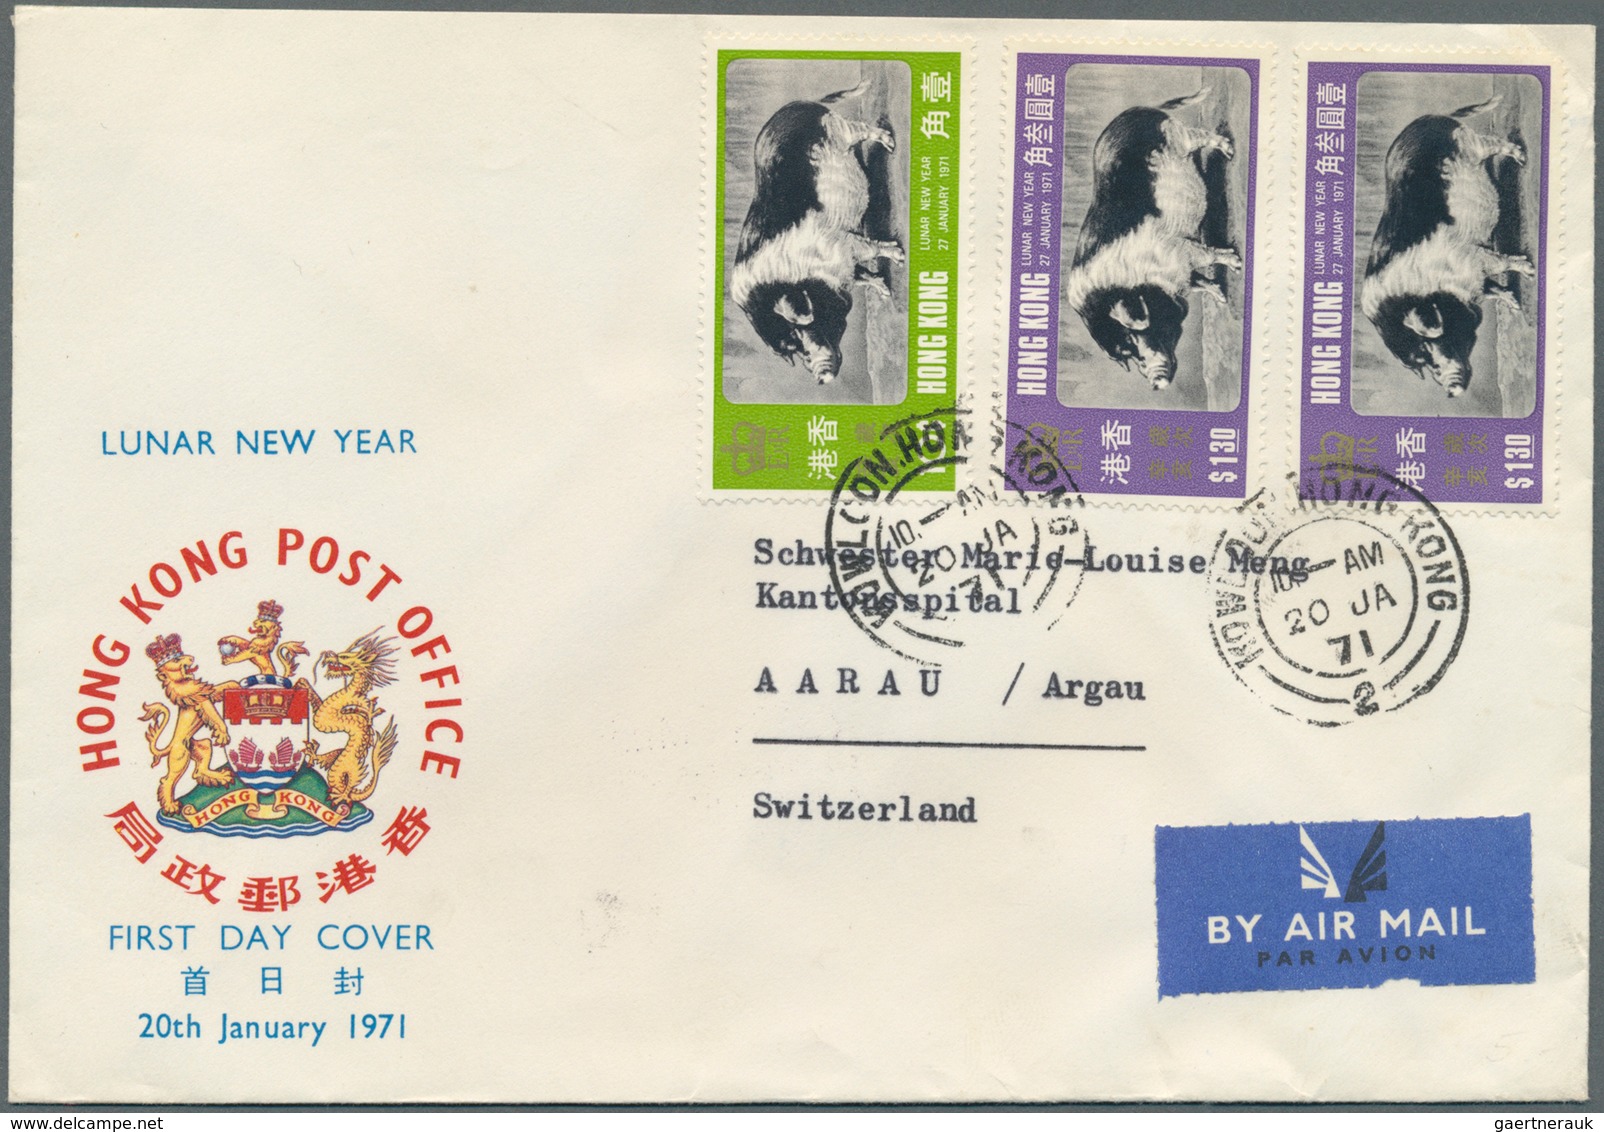 22670 Hongkong: 1910/70, covers (9); 1963/92, FDC (14, inc. 1963 Red Cross, 1967 new year, 1971 new year).